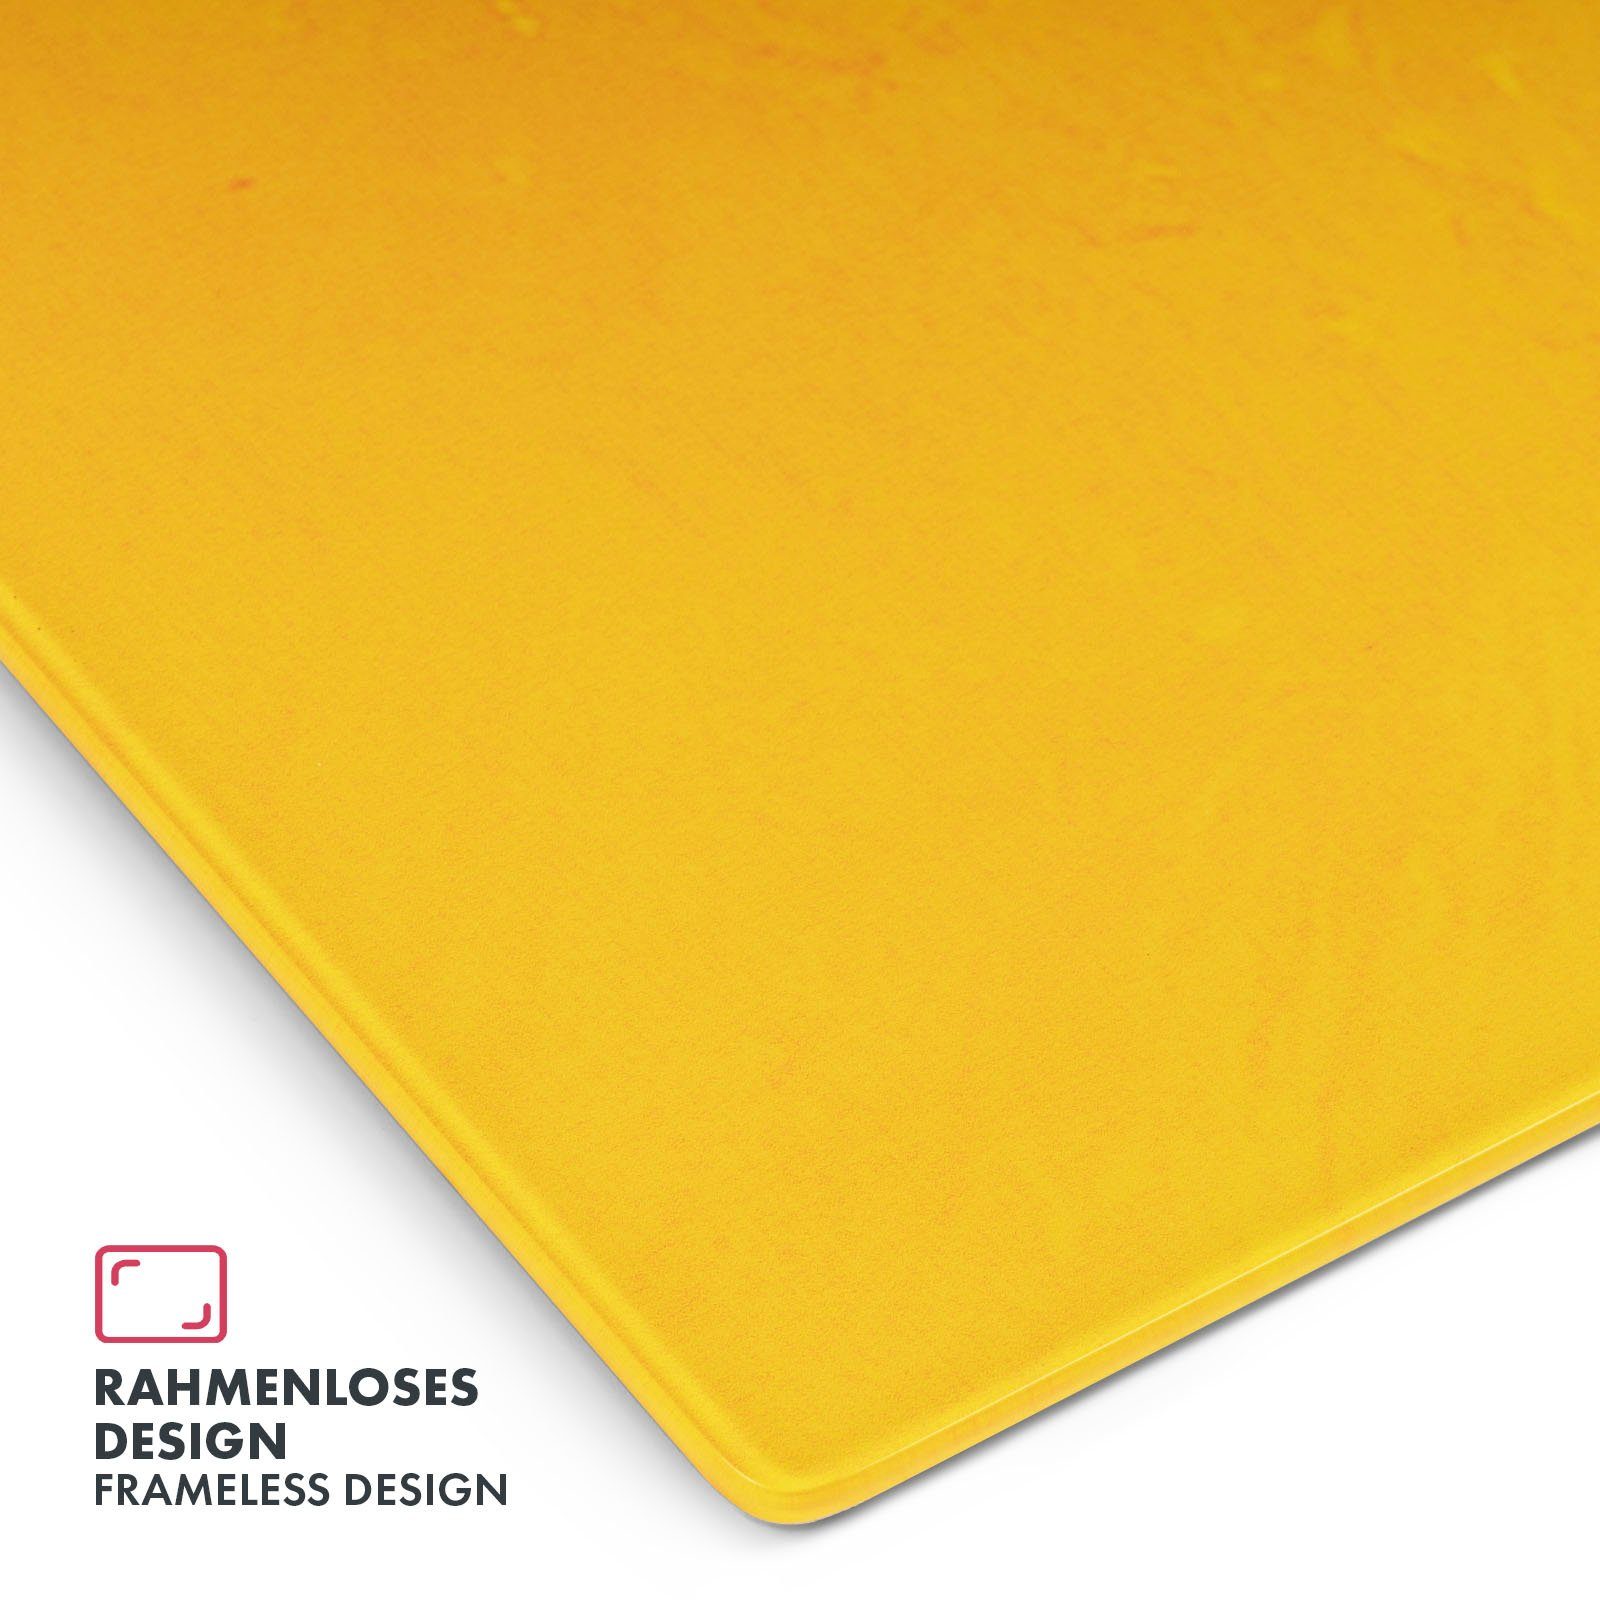 Karat - Gelb Magnete & Verschiedene Memoboard Montagematerial, Größen Print Inkl. Farben & Design-Glas-Memoboard,